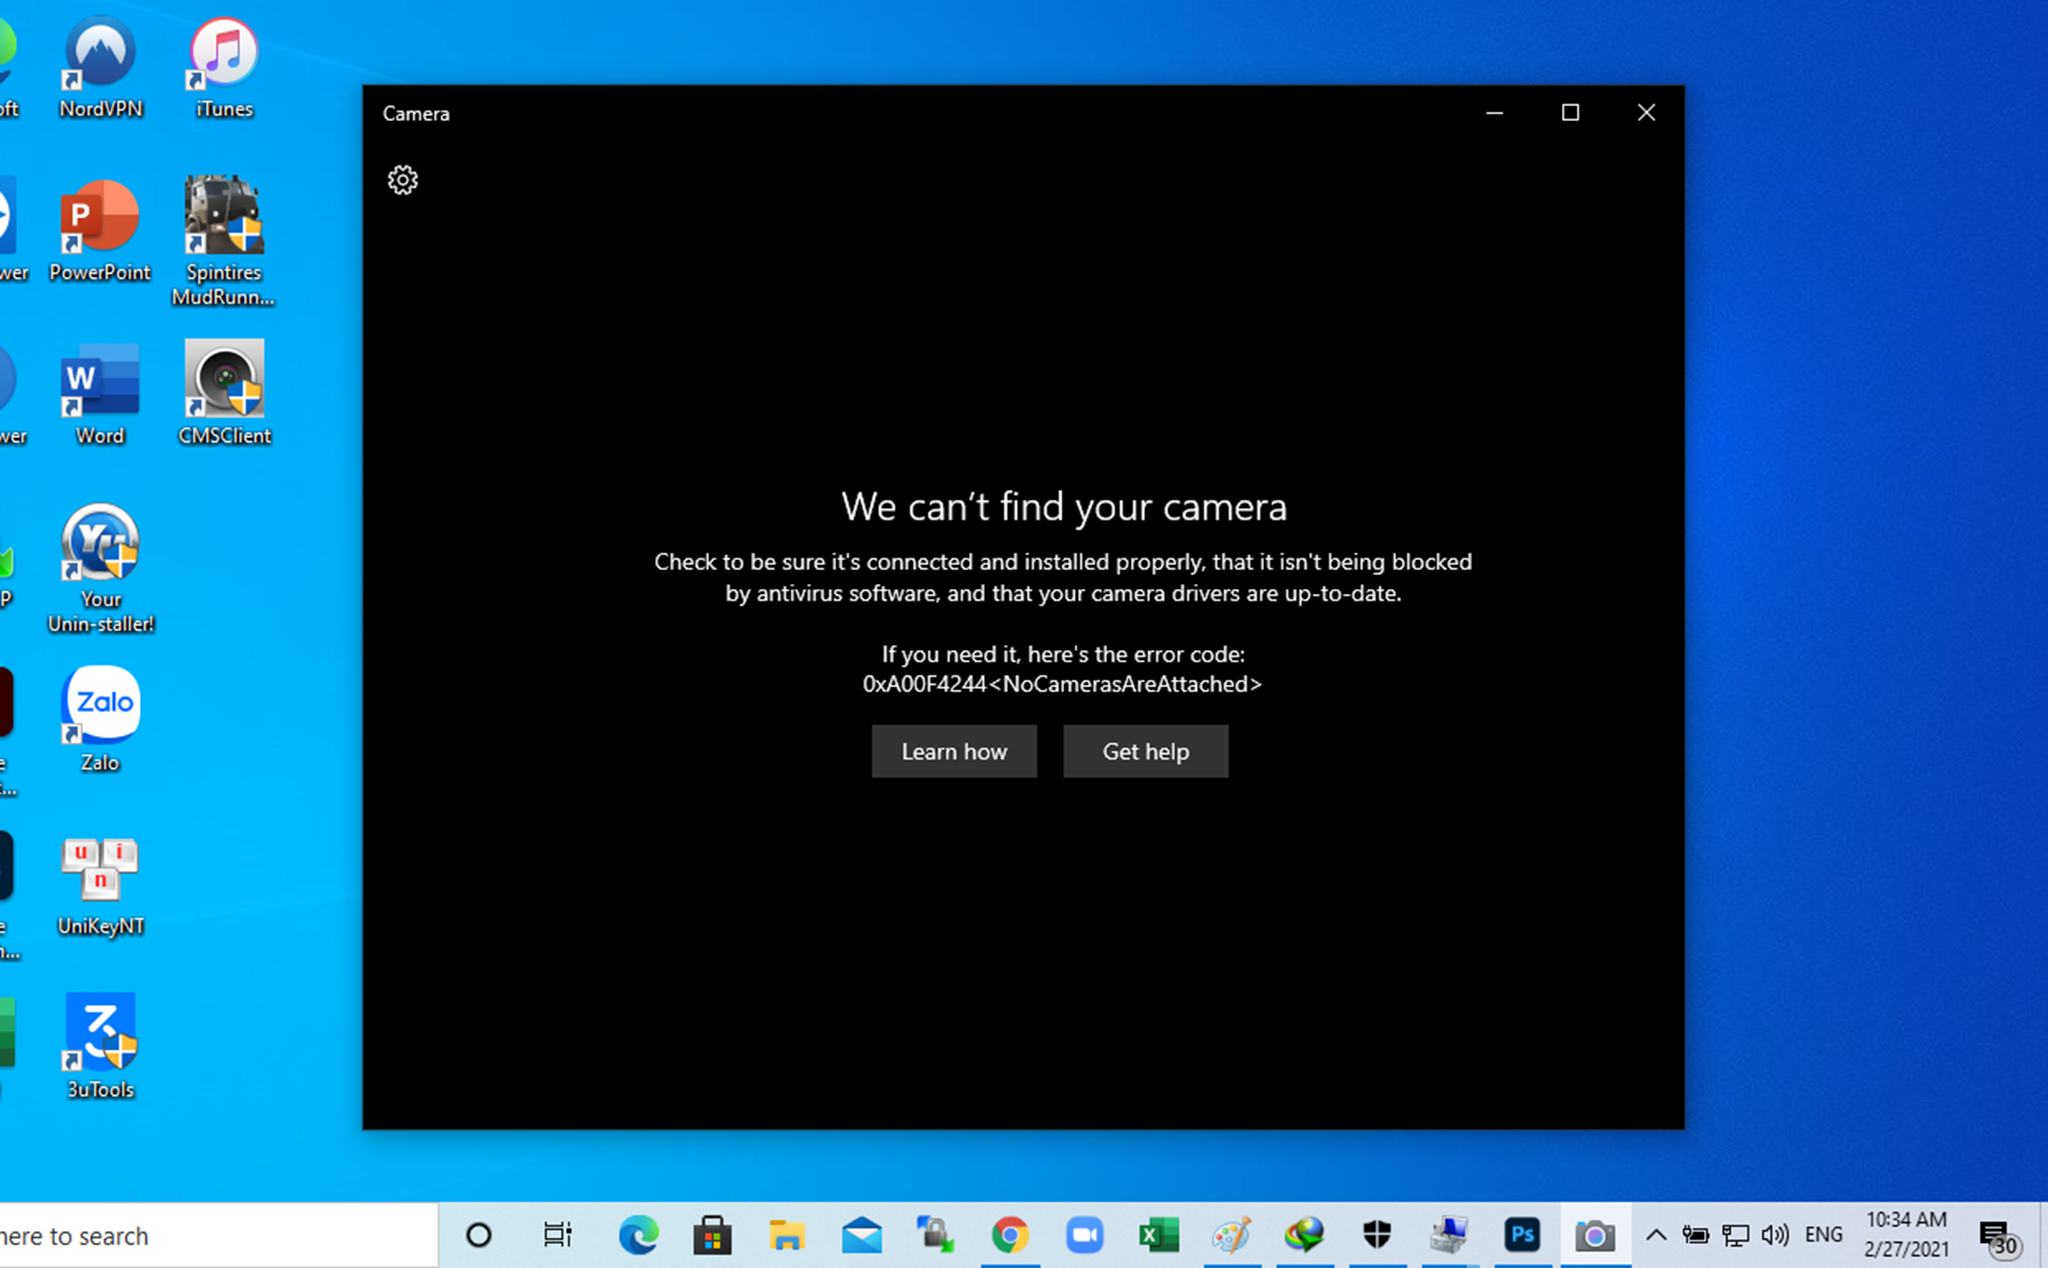 Khắc phục lỗi 0xA00F4244 we can't find your camera trên Windows 10 - Ngolongnd.net